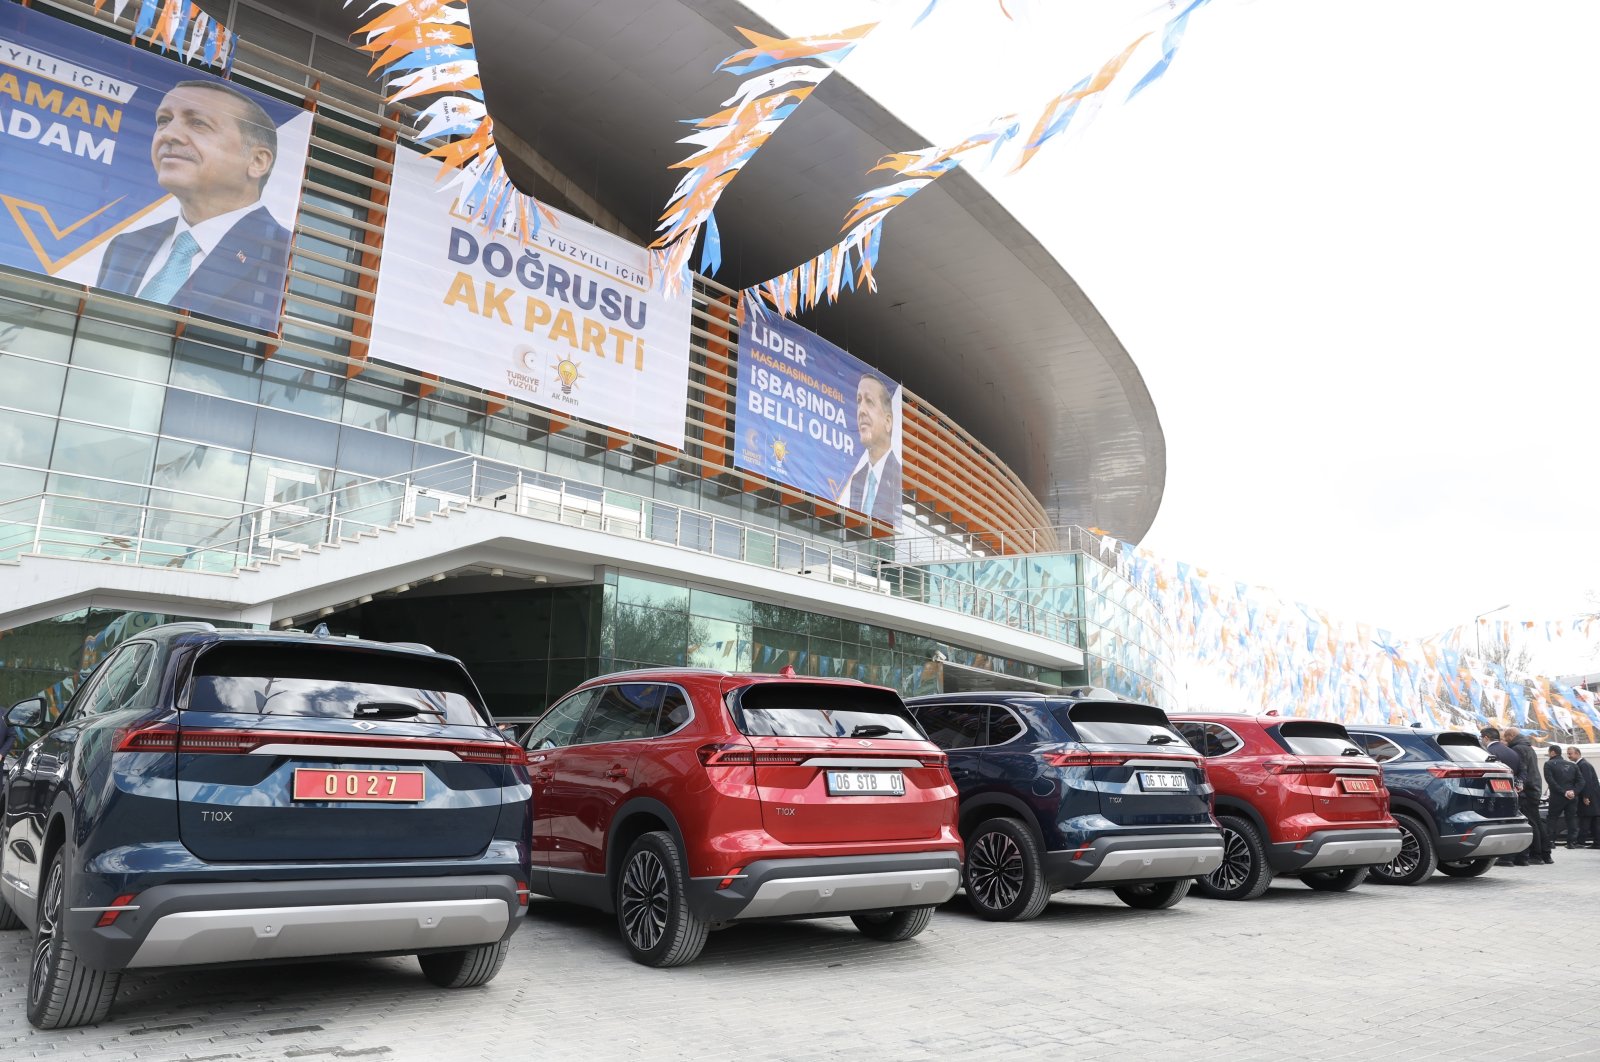 Togg T10Xs, SUV models of Türkiye&#039;s first domestic car brand, that belong to Cabinet members are seen outside the Ankara Sports Hall, in the capital Ankara, Türkiye, April 11, 2023. (AA Photo)